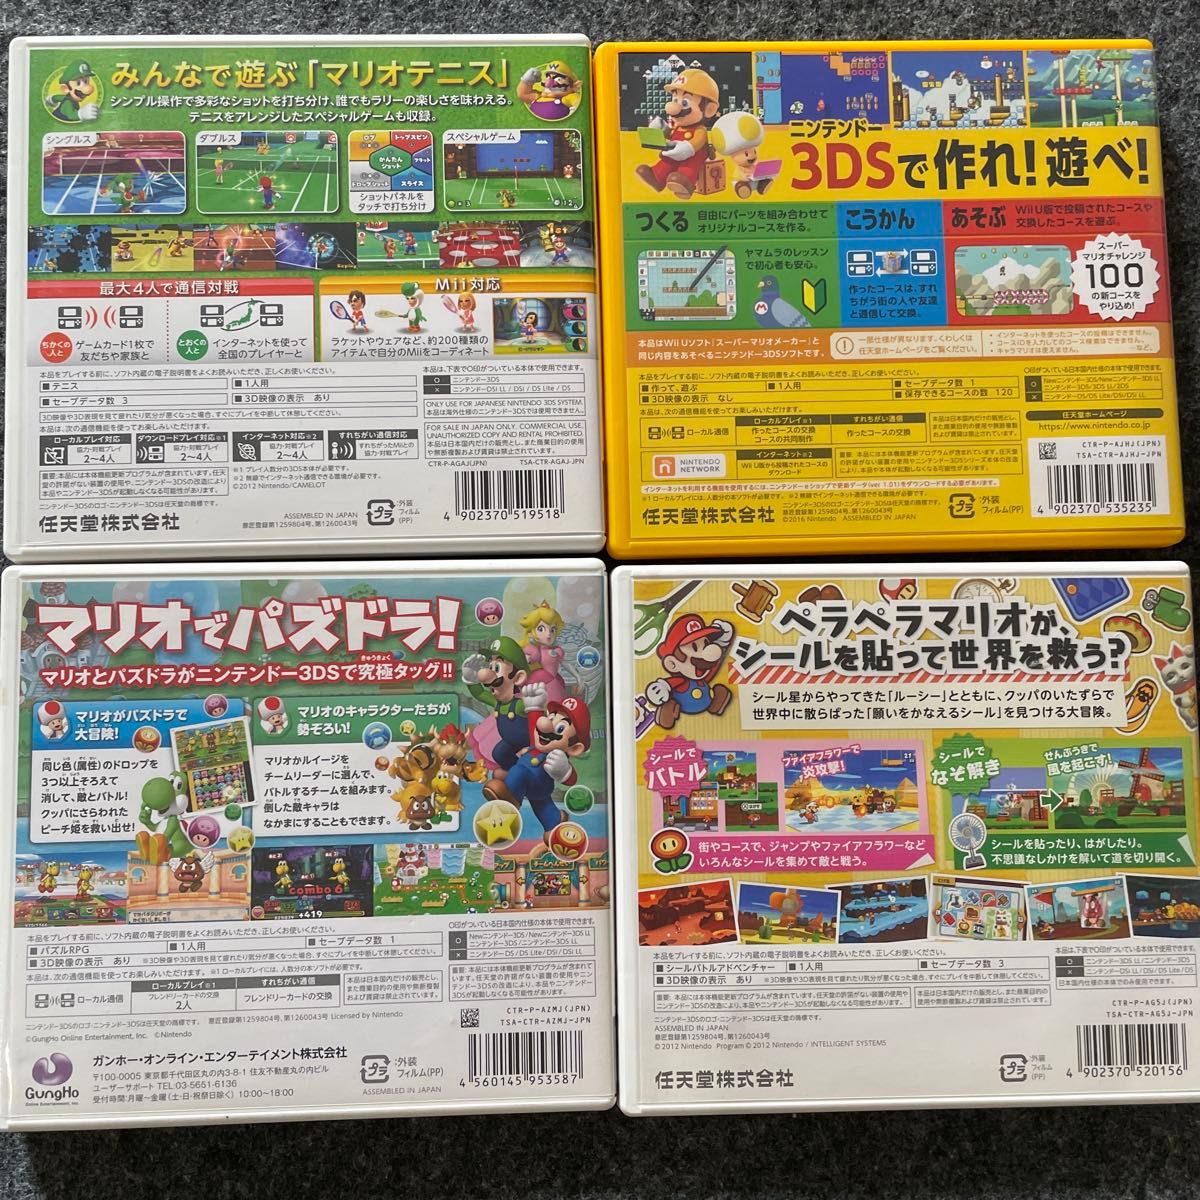 3DS ペーパーマリオスーパーシールパズル&ドラゴンズスーパーマリオブラザーズマリオオープンテニススーパーマリオメーカー